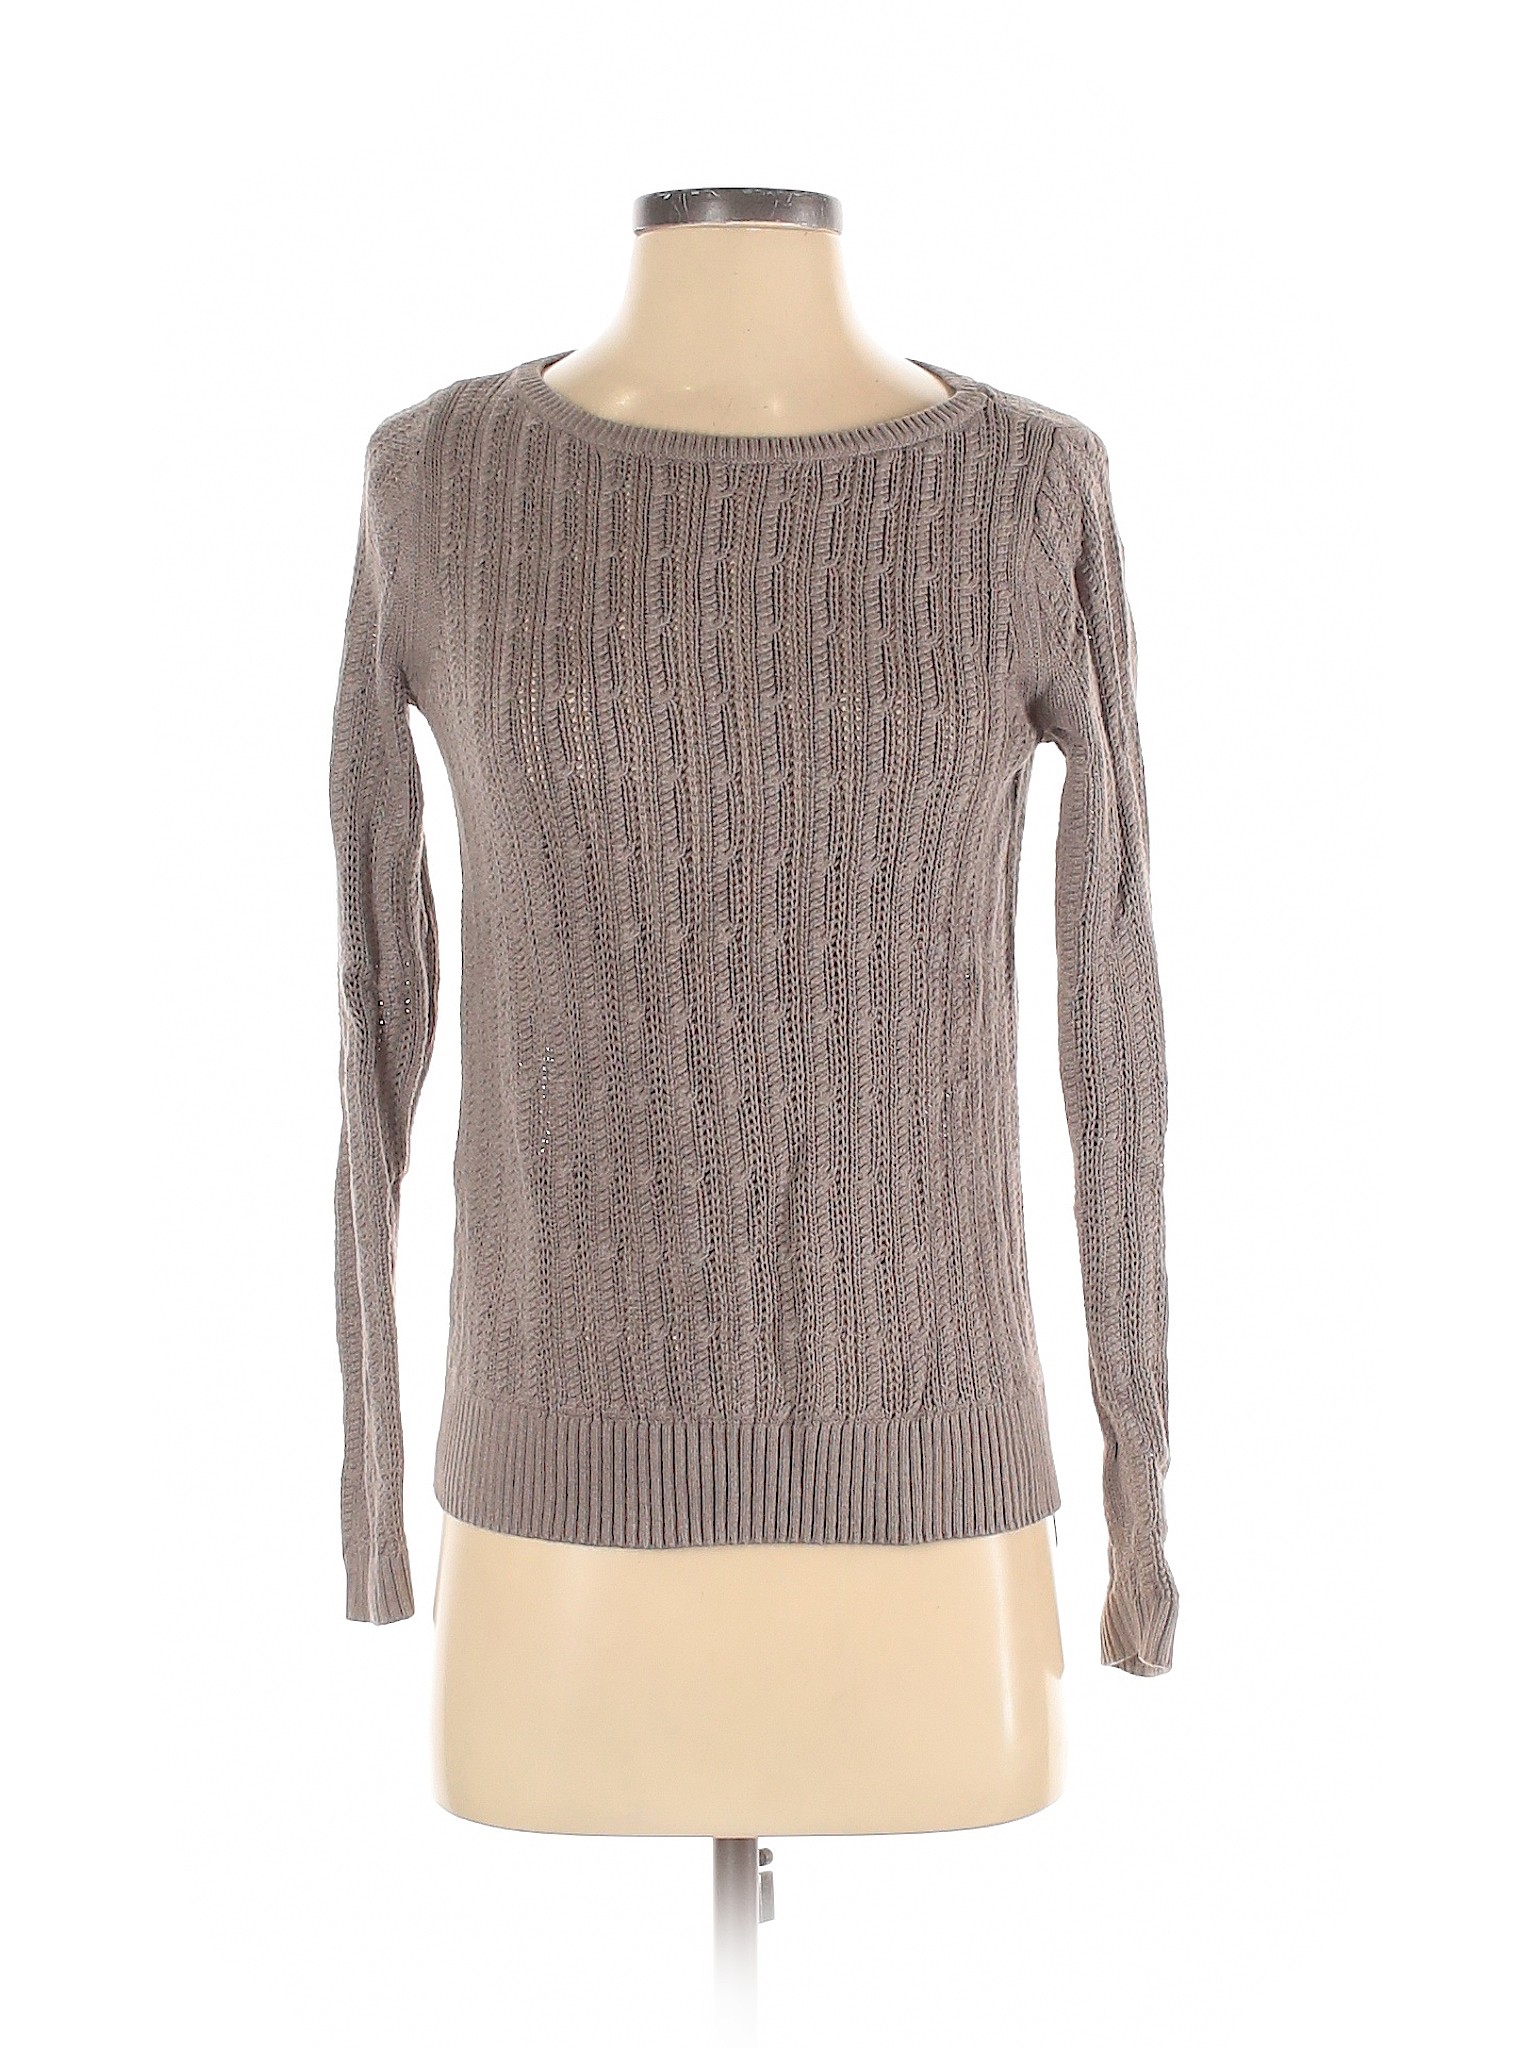 Ann Taylor LOFT Women Brown Pullover Sweater XS | eBay